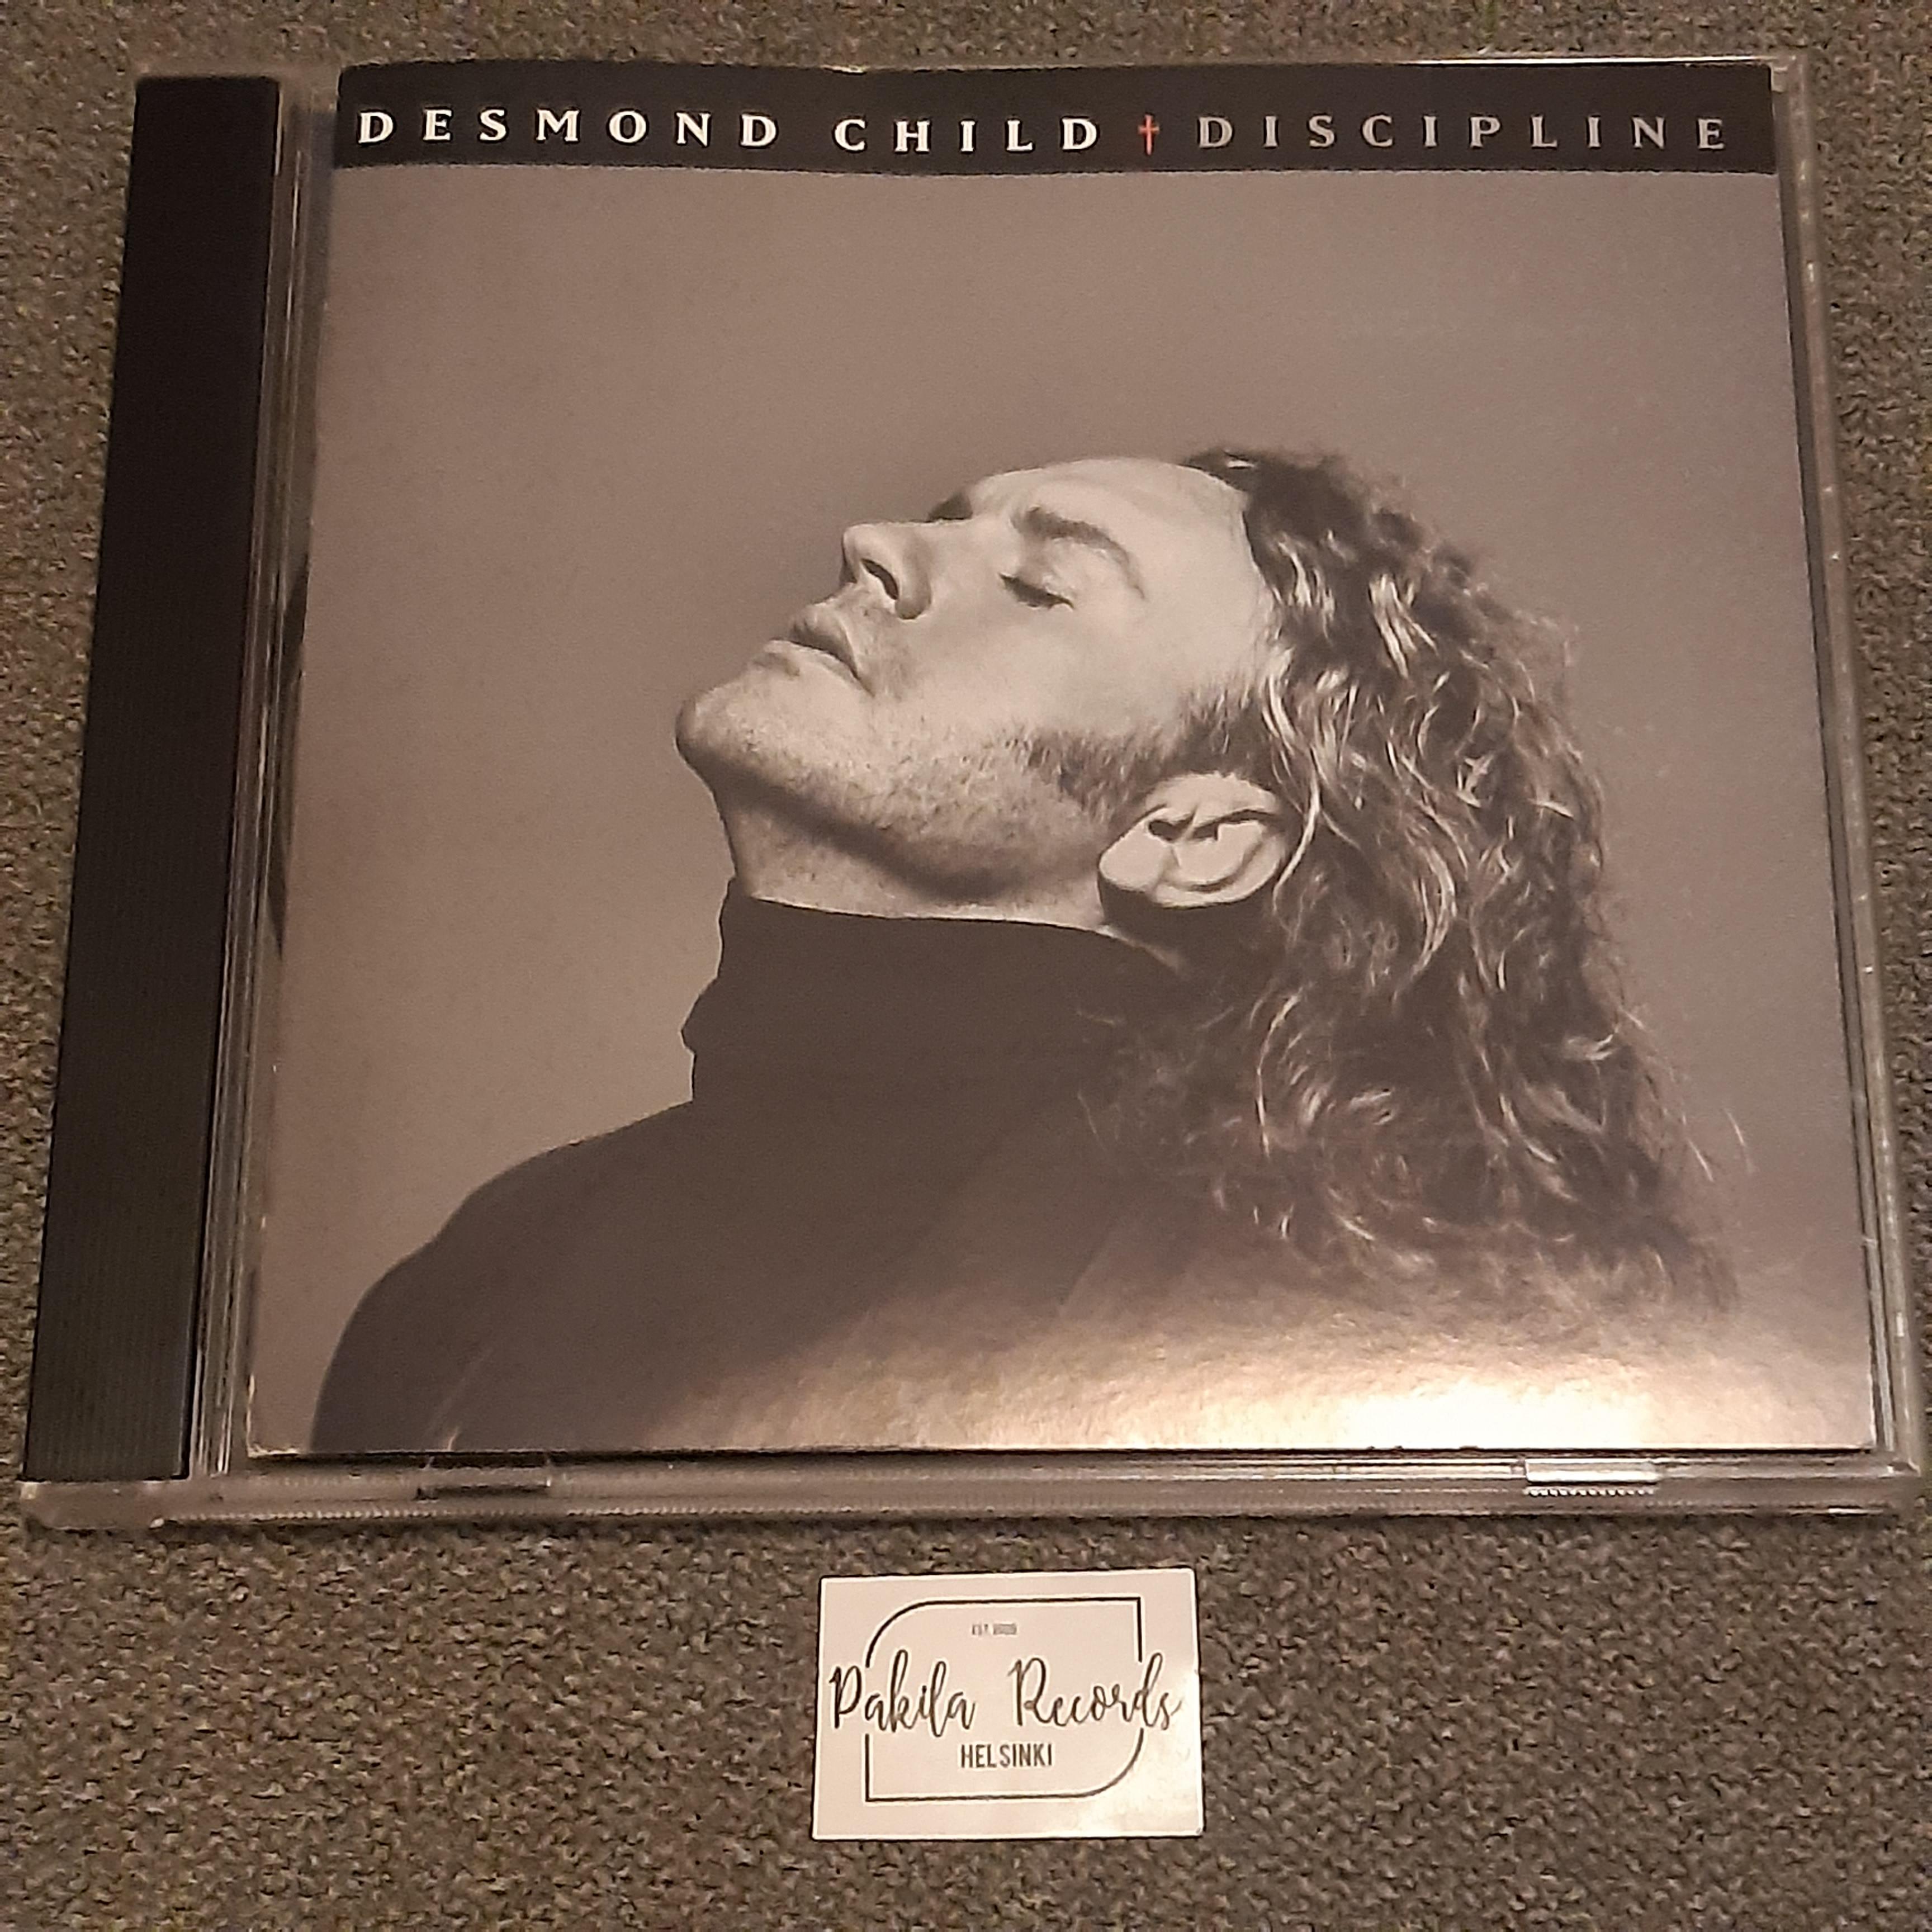 Desmond Child - Discipline - CD (käytetty)